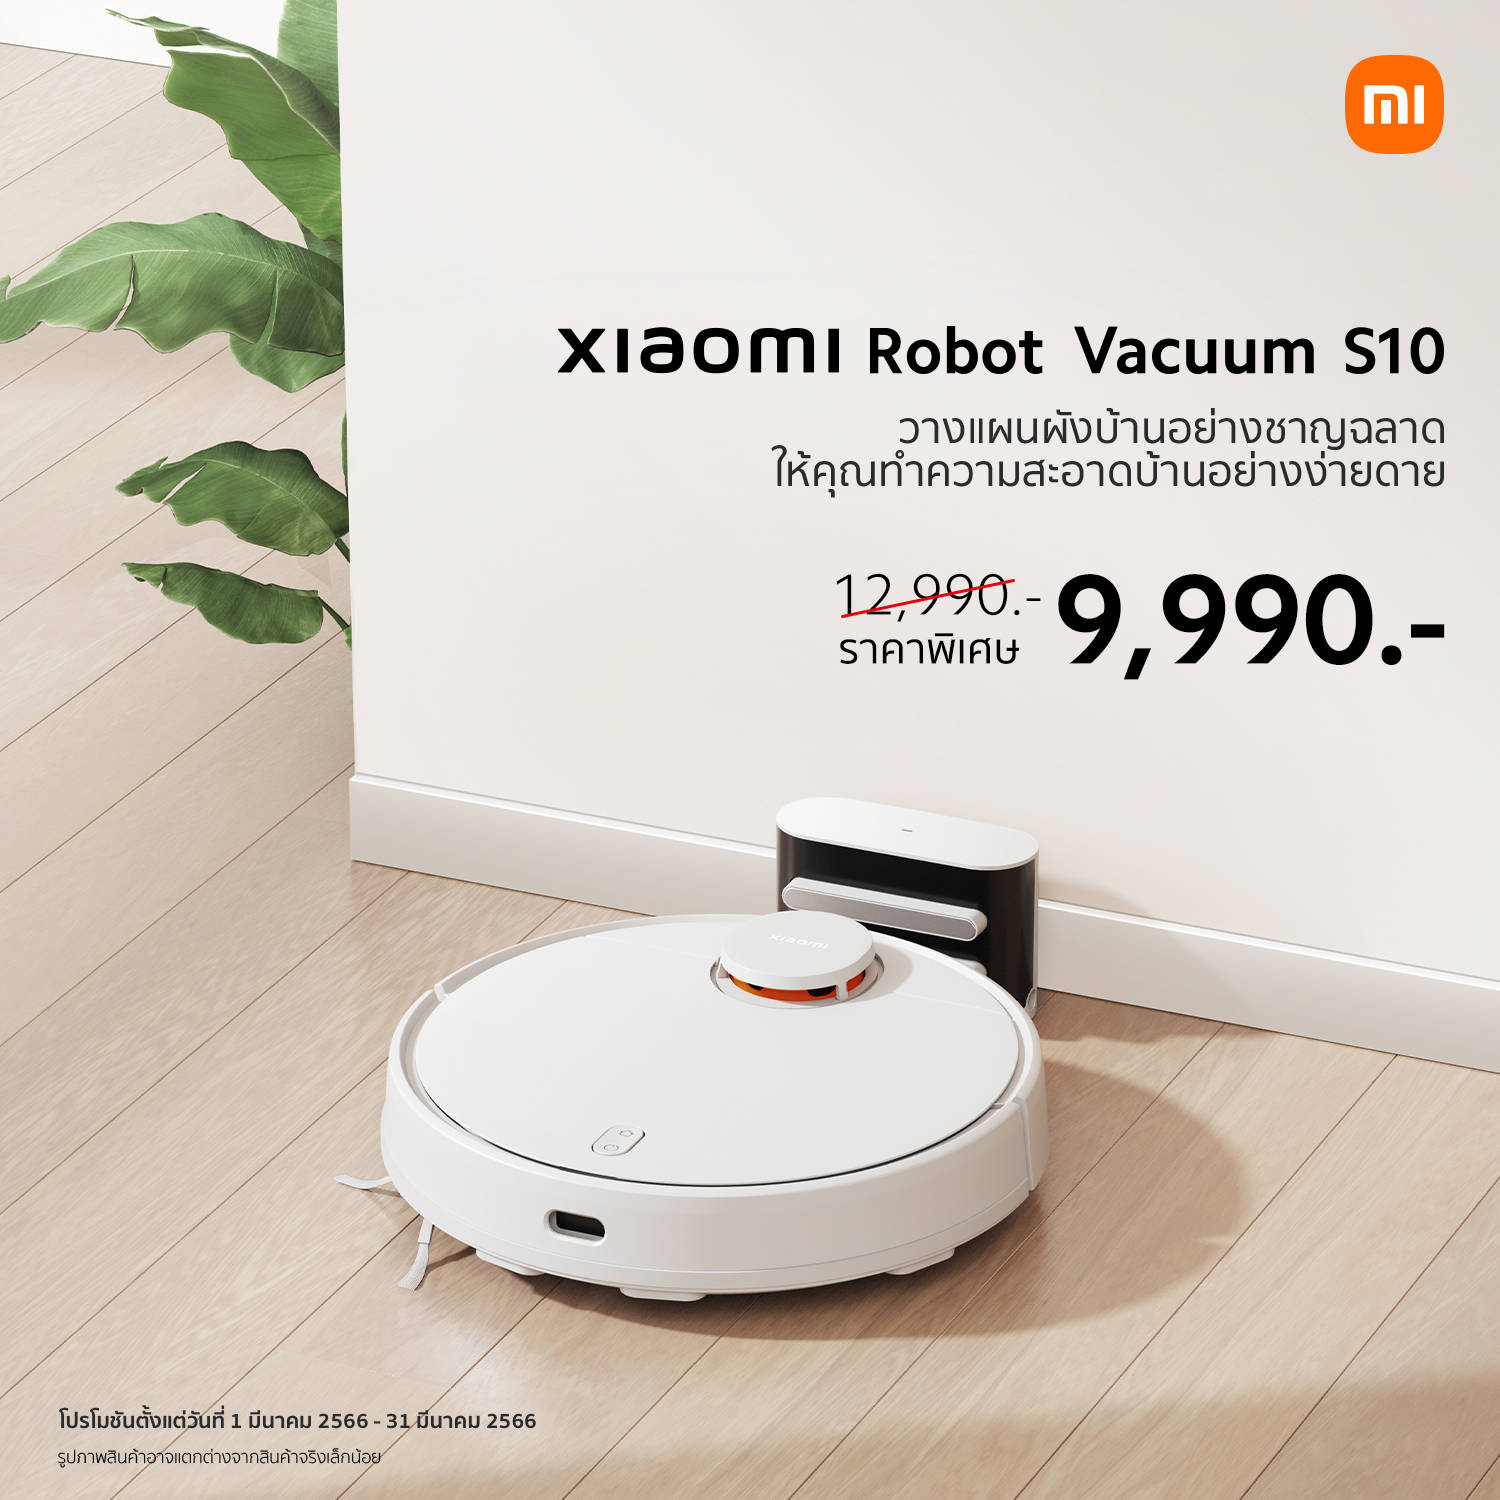 xiaomi-robot-vacuum-s10-kv_1